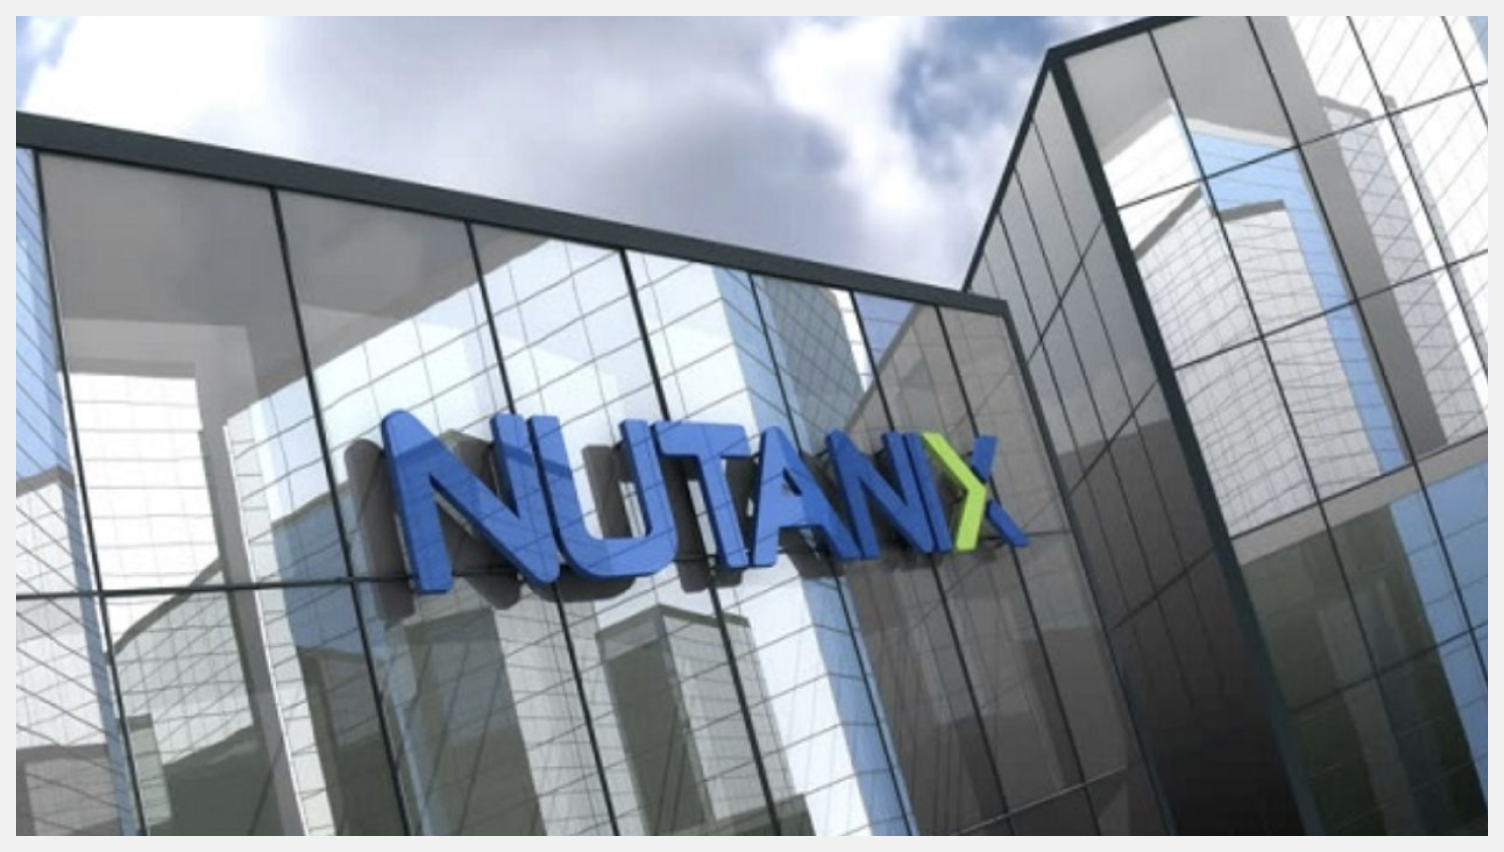 Photograph of Nutanix office